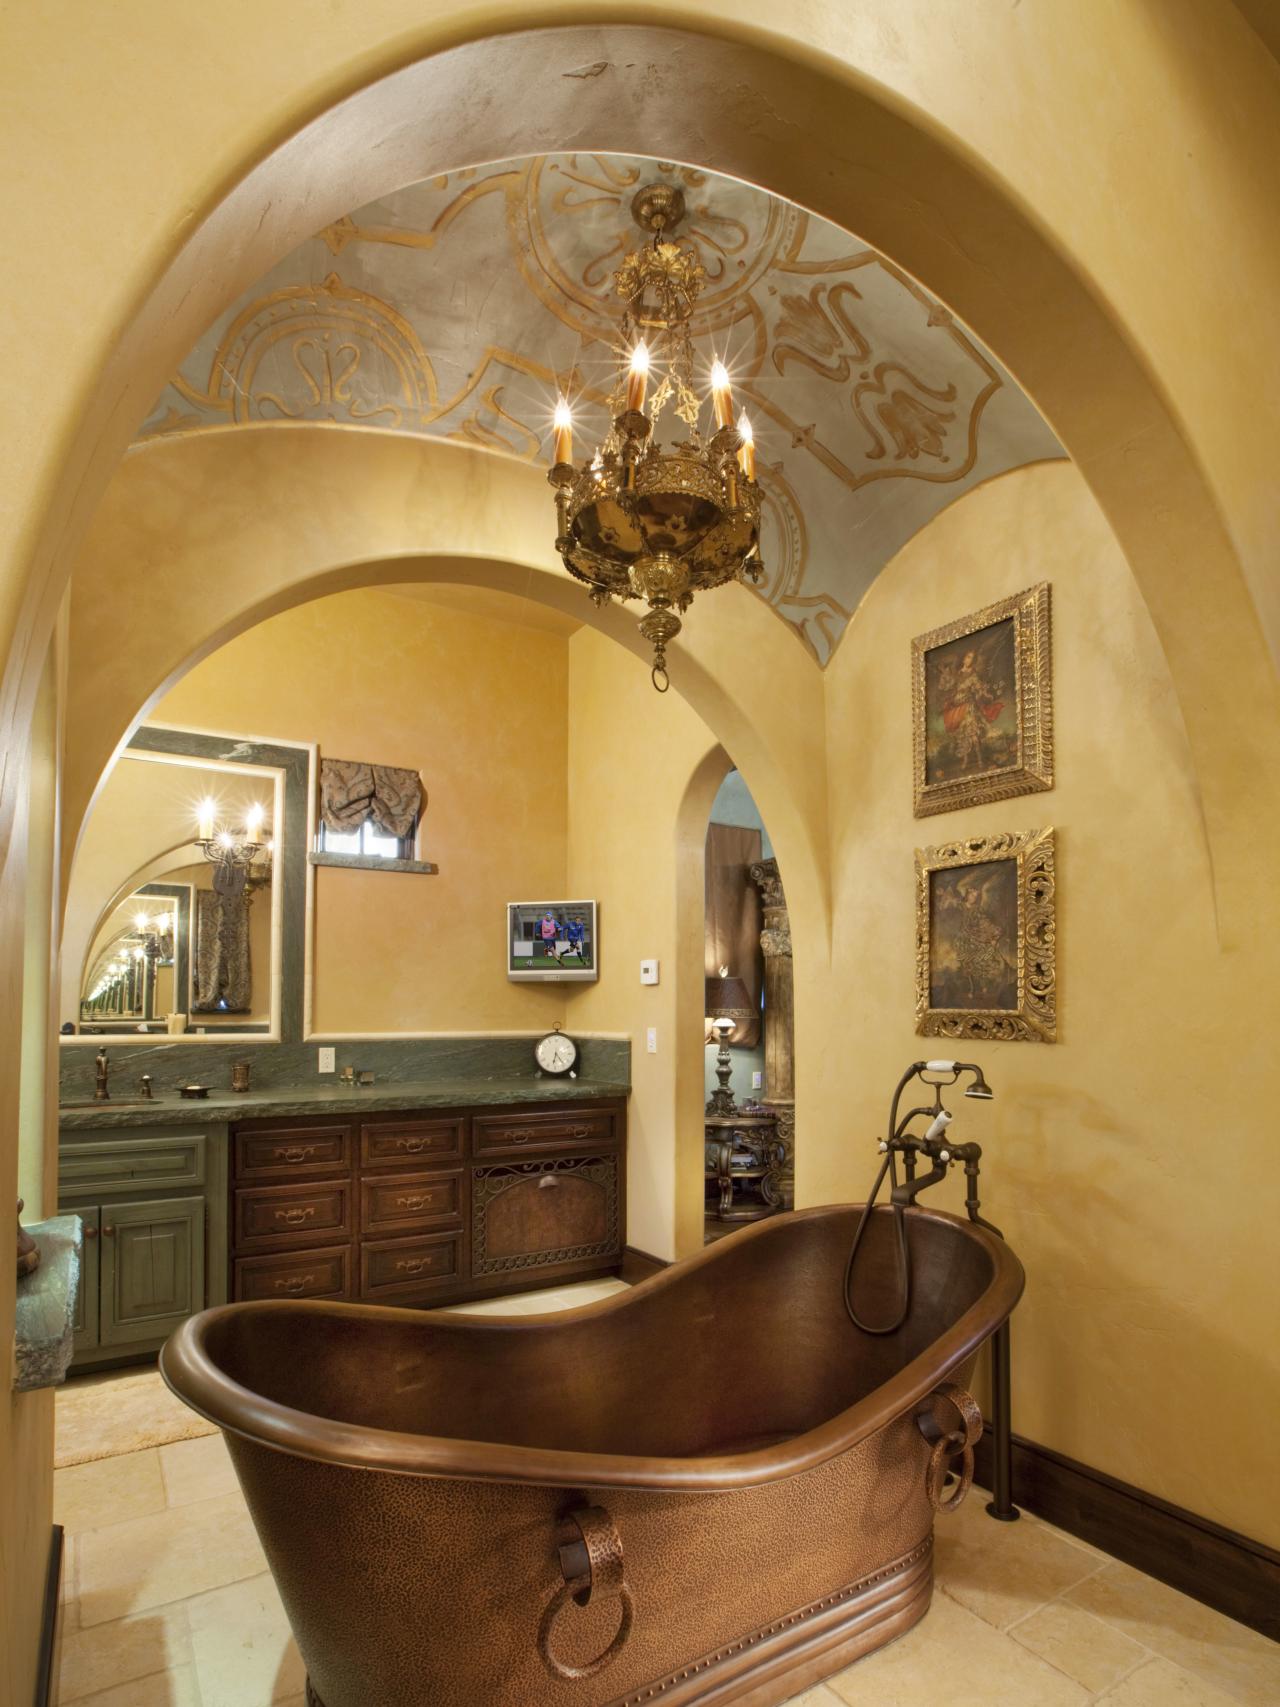 Copper Tub in Elegant Mediterranean Bathroom